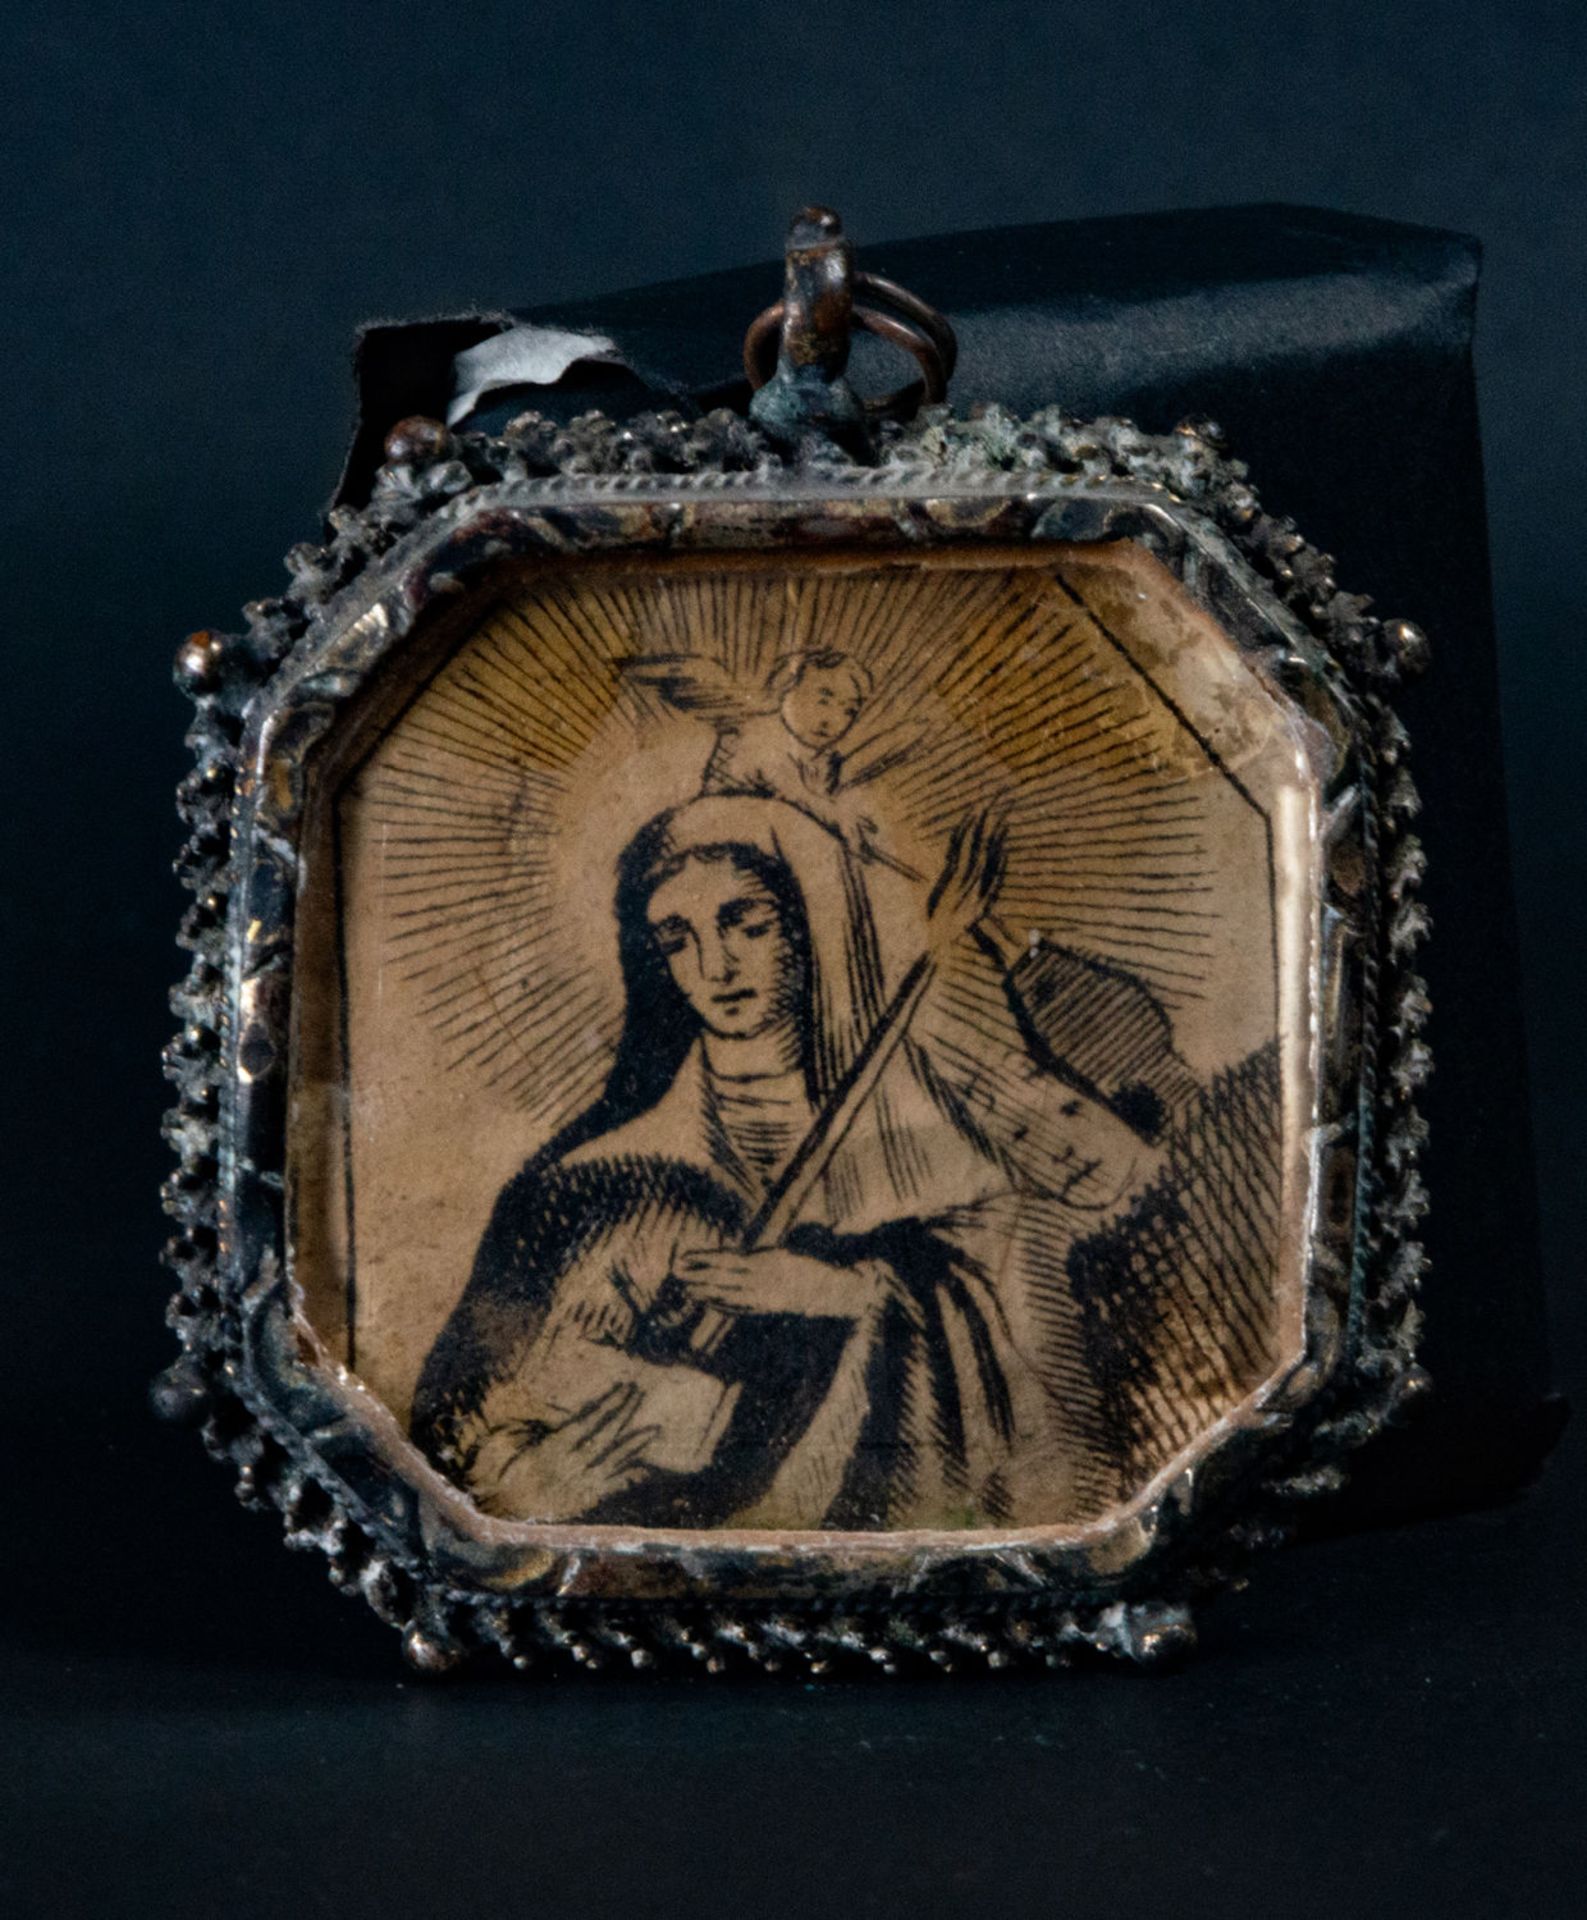 Octagonal Filigree Reliquary representing Saint Teresa, 17th century - Image 2 of 3